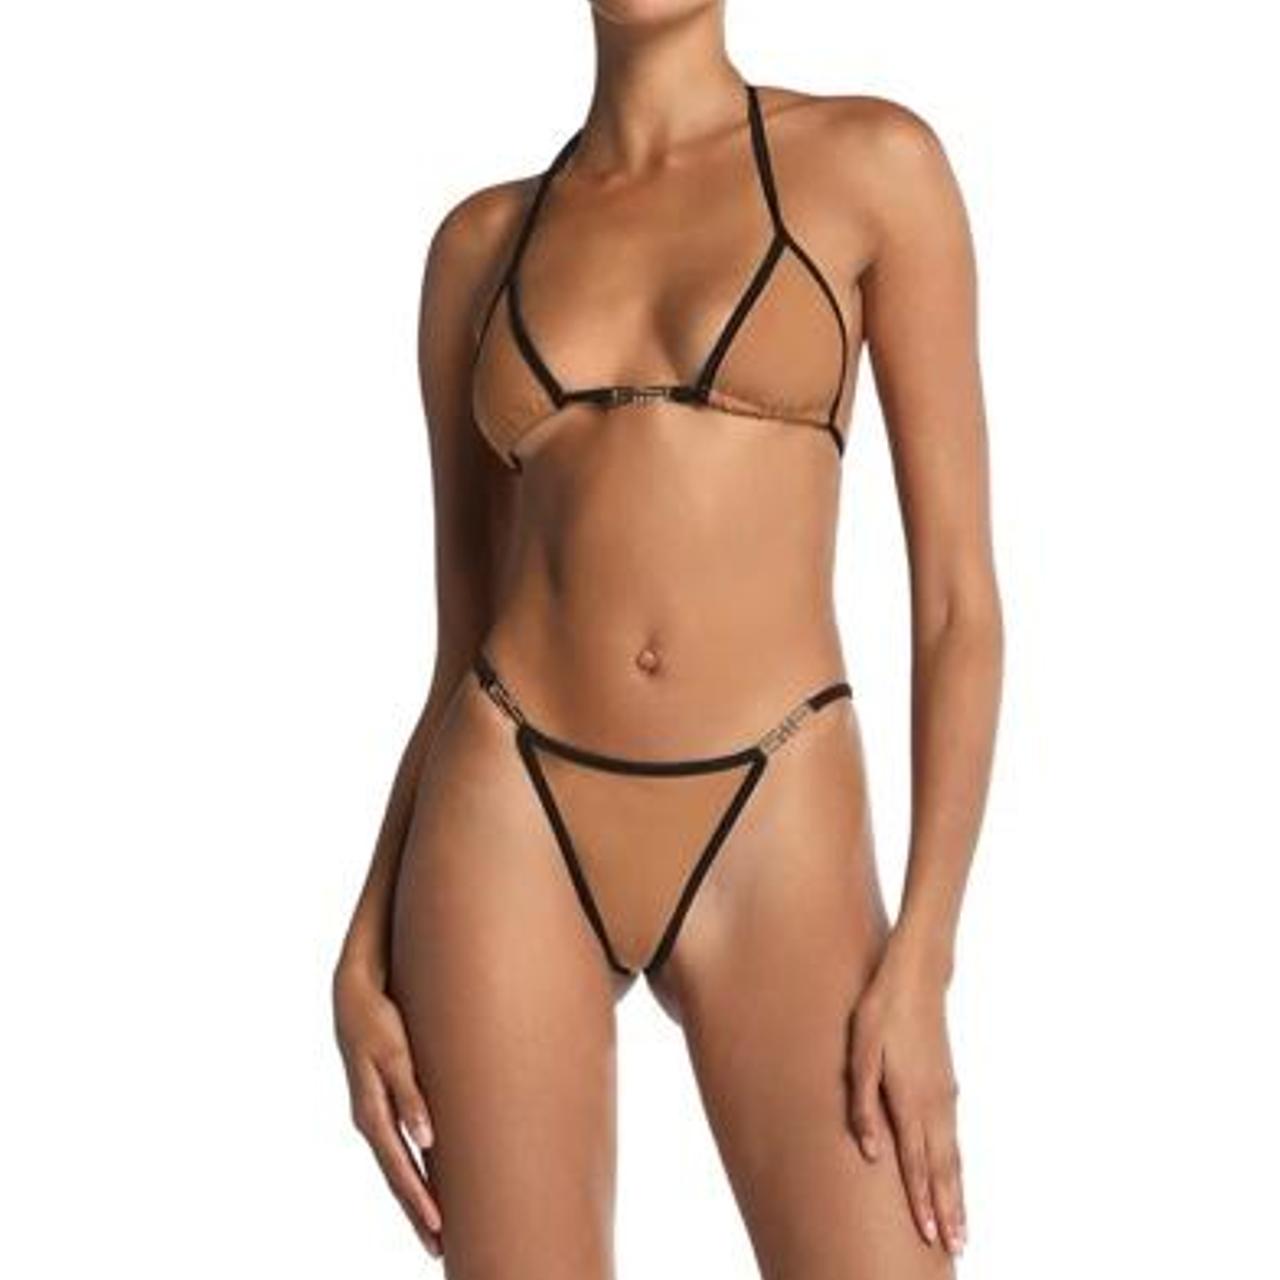 Product Image 1 - I.am.Gia Ava Bikini set
Bikini too